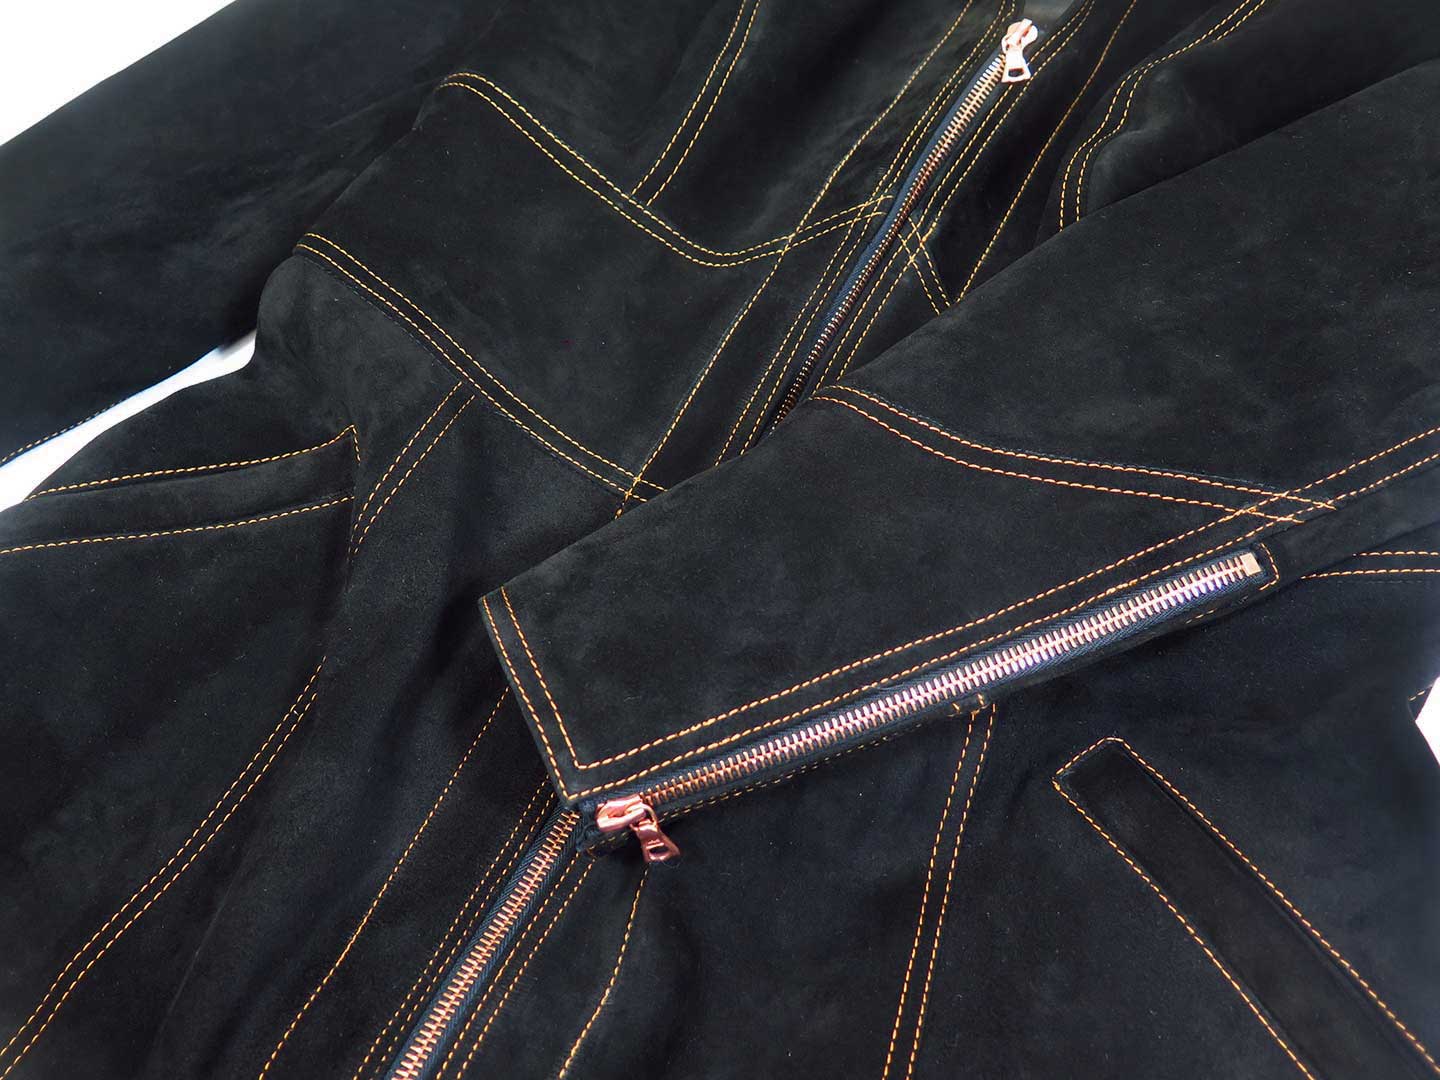 1970s inspired Bespoke suede jacket